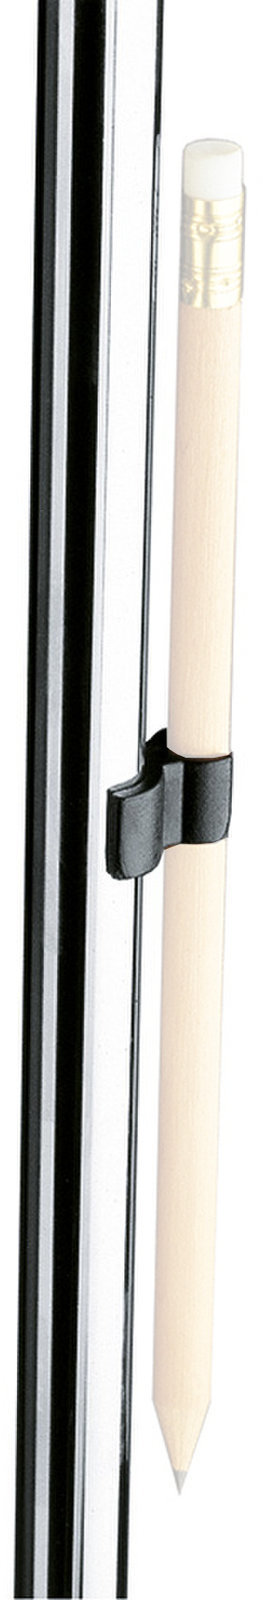 Stand PC Konig & Meyer Pencil Holder Black